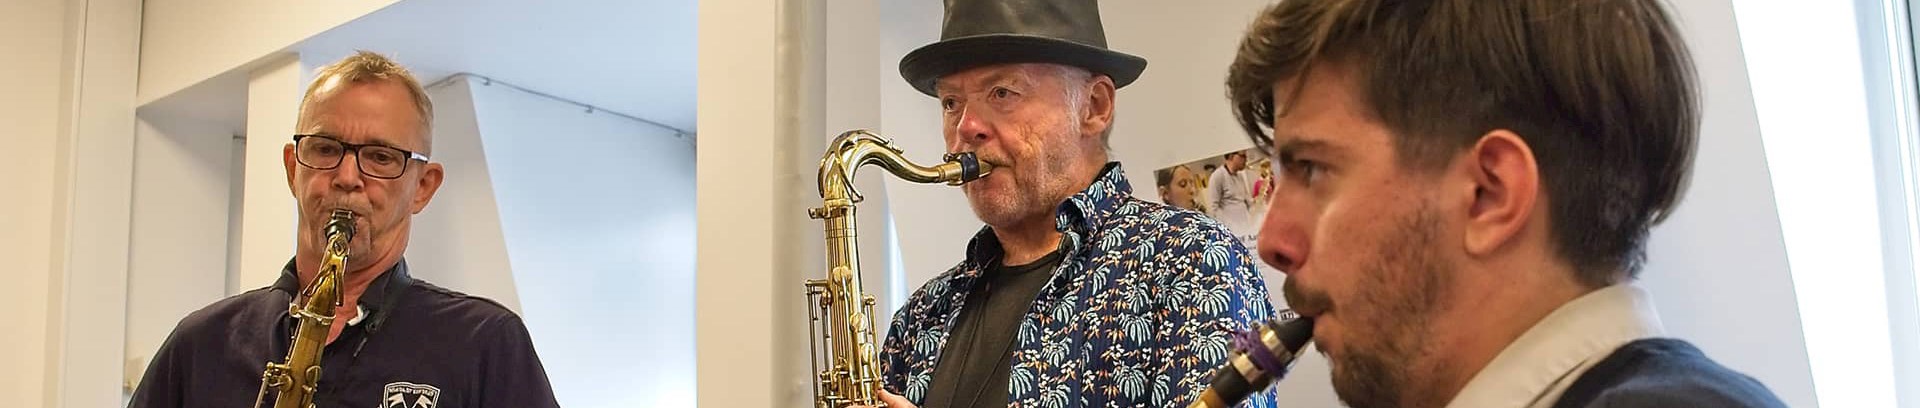 Jazz Me Up - saxofonkursus i FOF Aarhus.